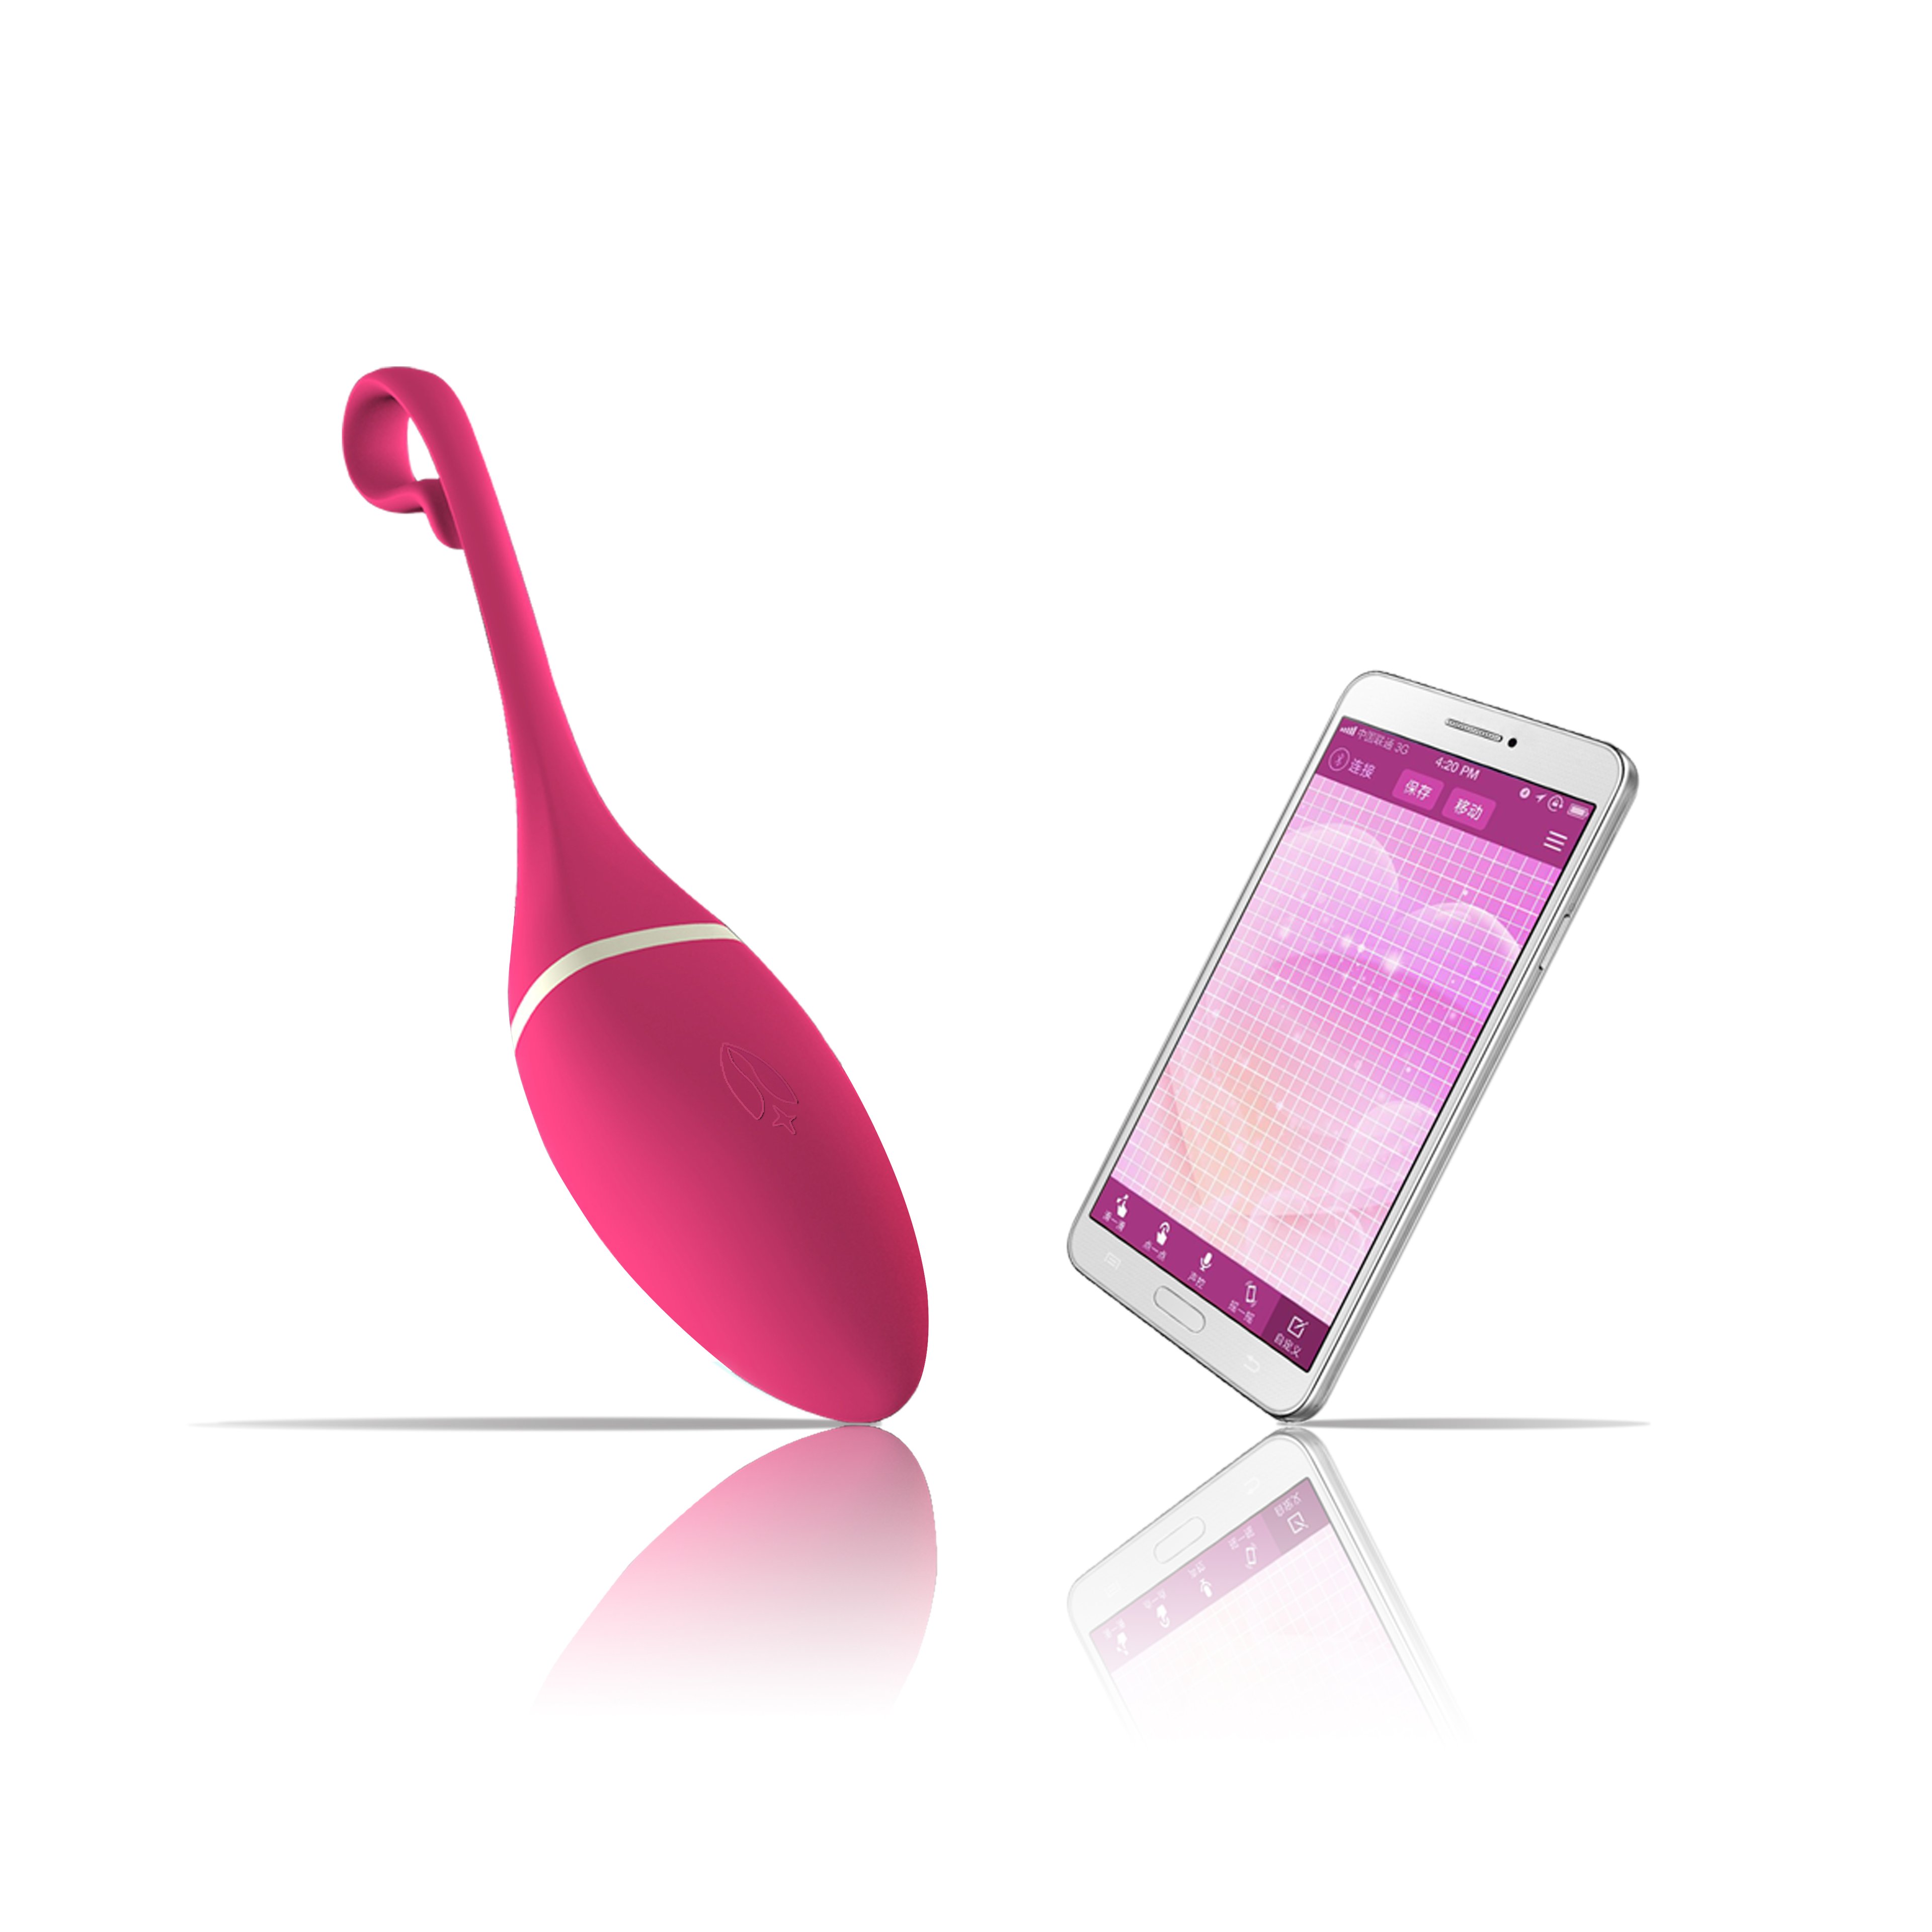 Realov İrena 1 Pink Telefon Kontrollü Vibratör